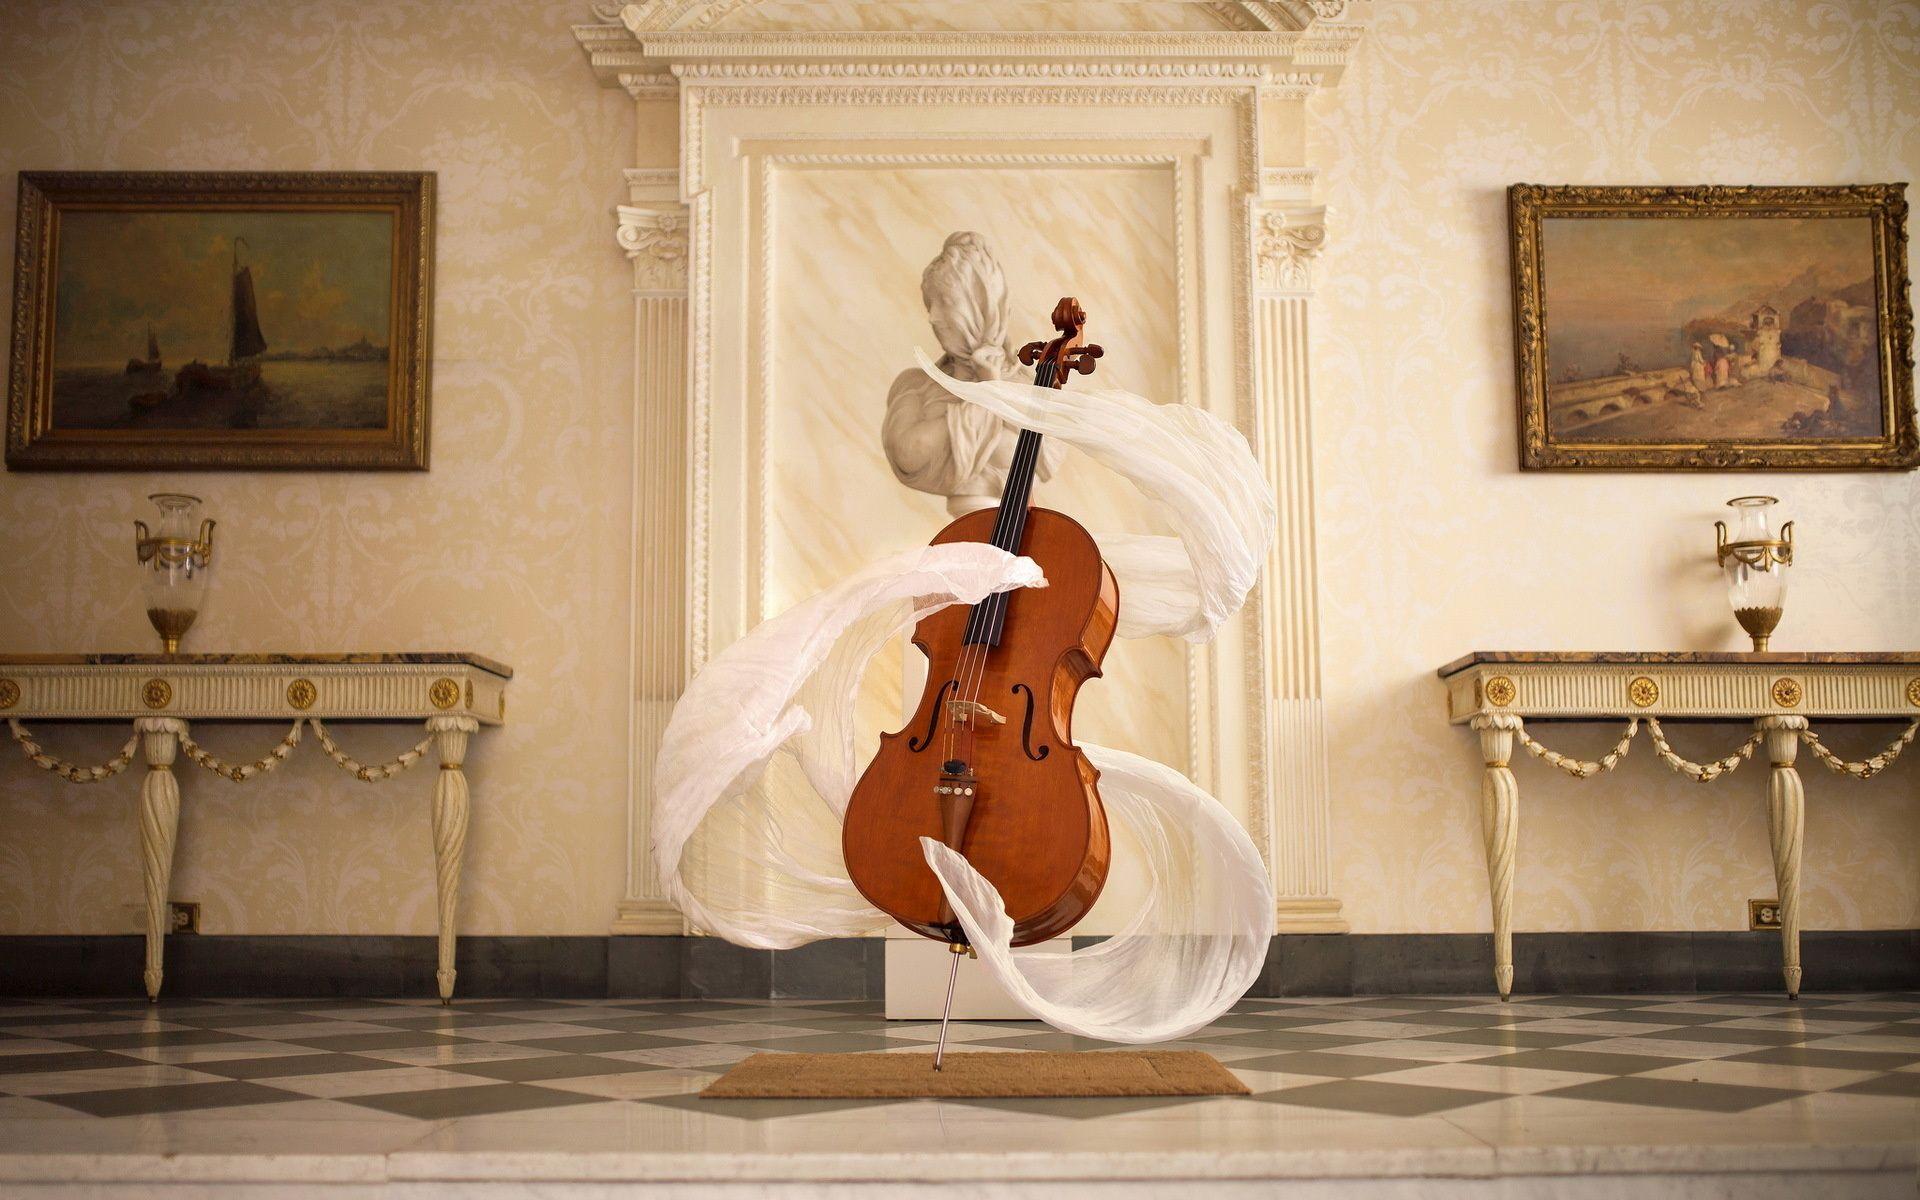 Music, Spirit, Cello, Scarf, Statue, Instrument, Surreal